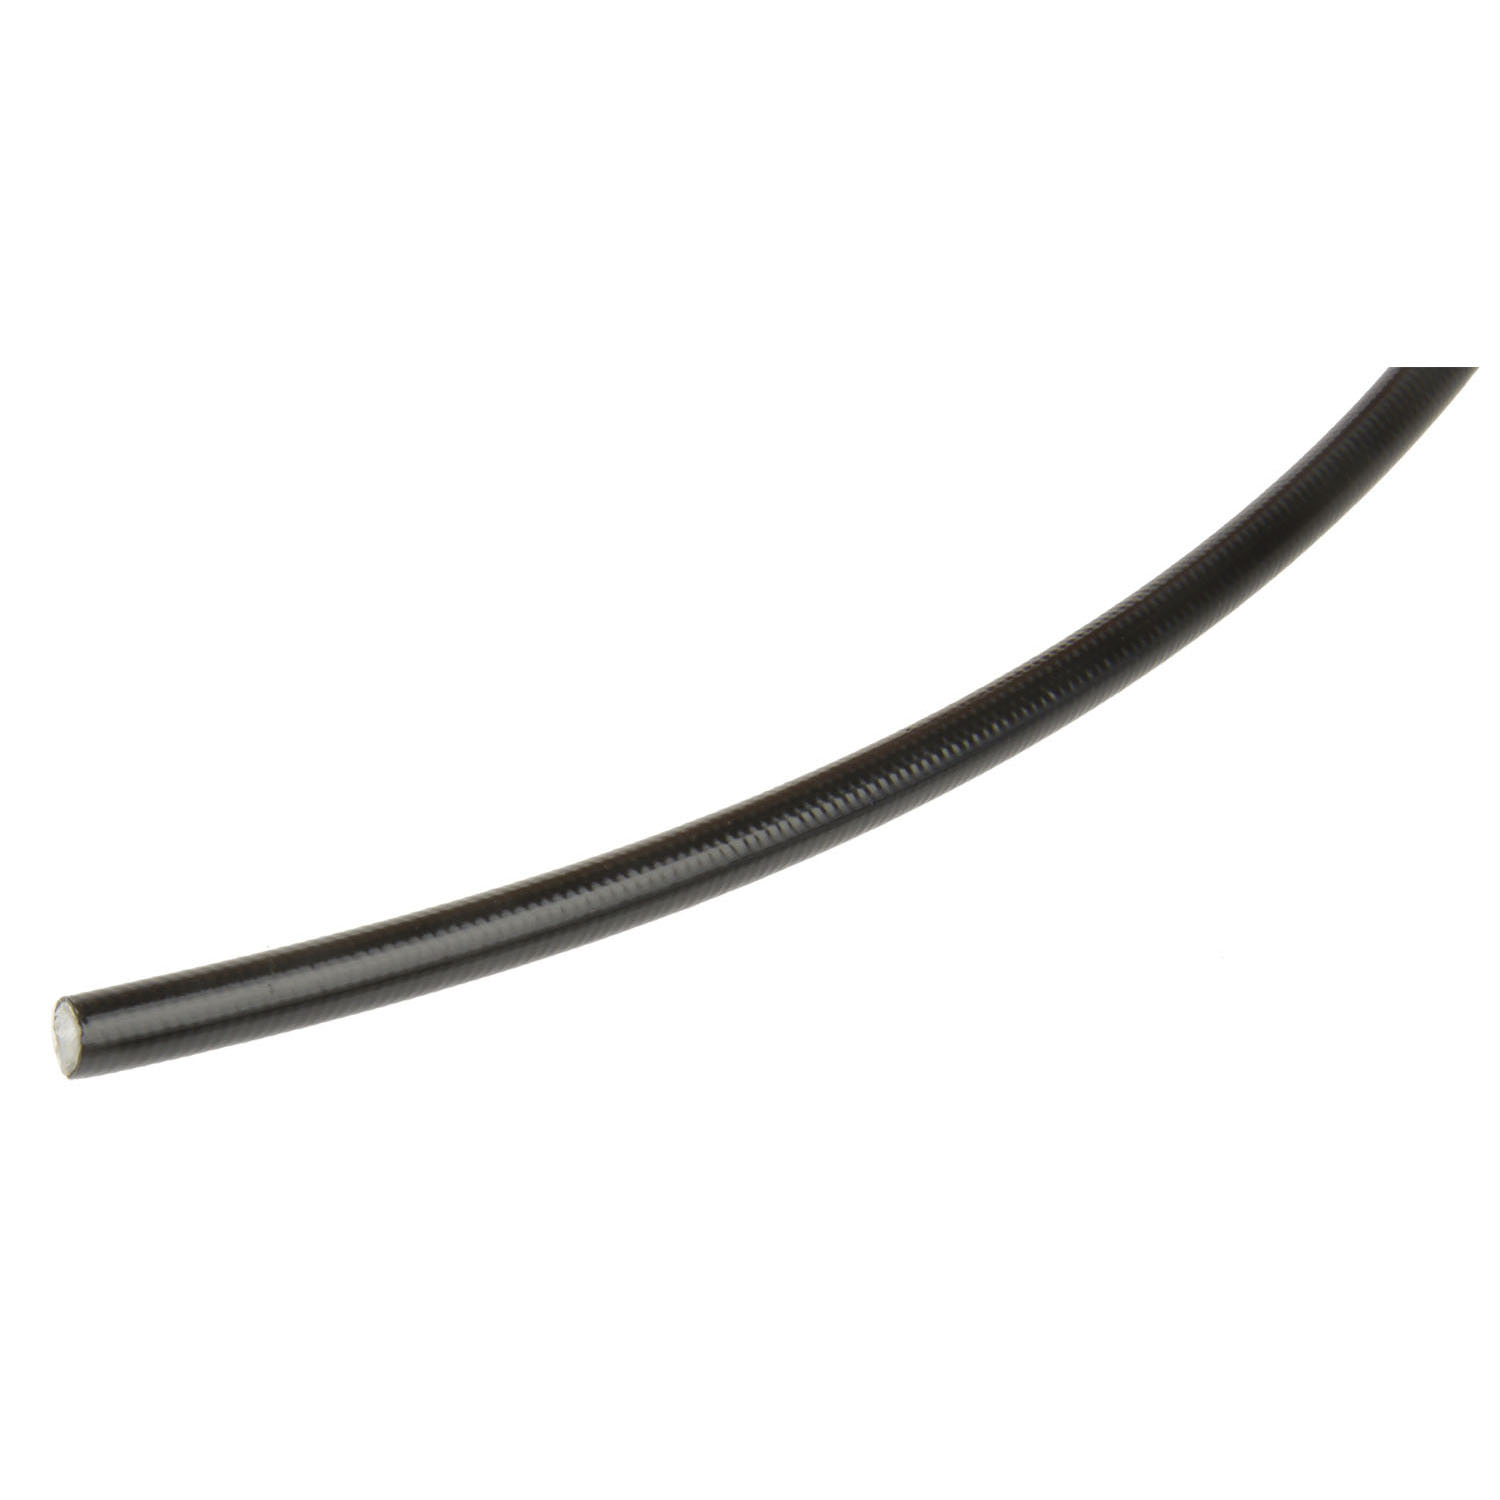 Cable exterior hidráulico negro 30 m diámetro interior 2.5 mm, diámetro exterior 5.5 mm